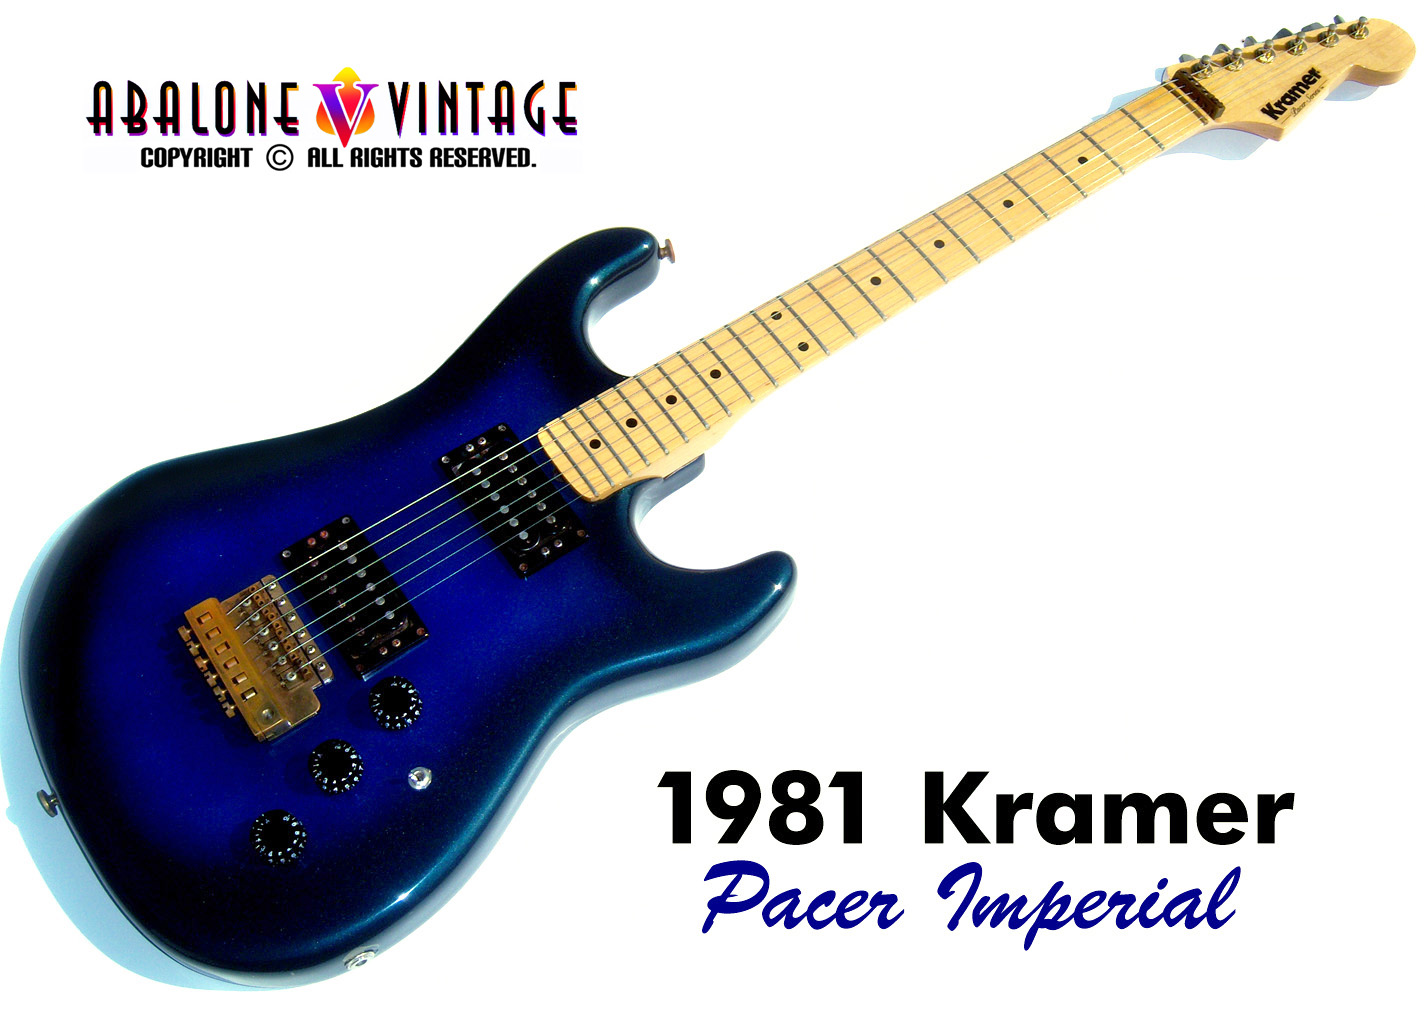 1981 Kramer Pacer Imperial guitar